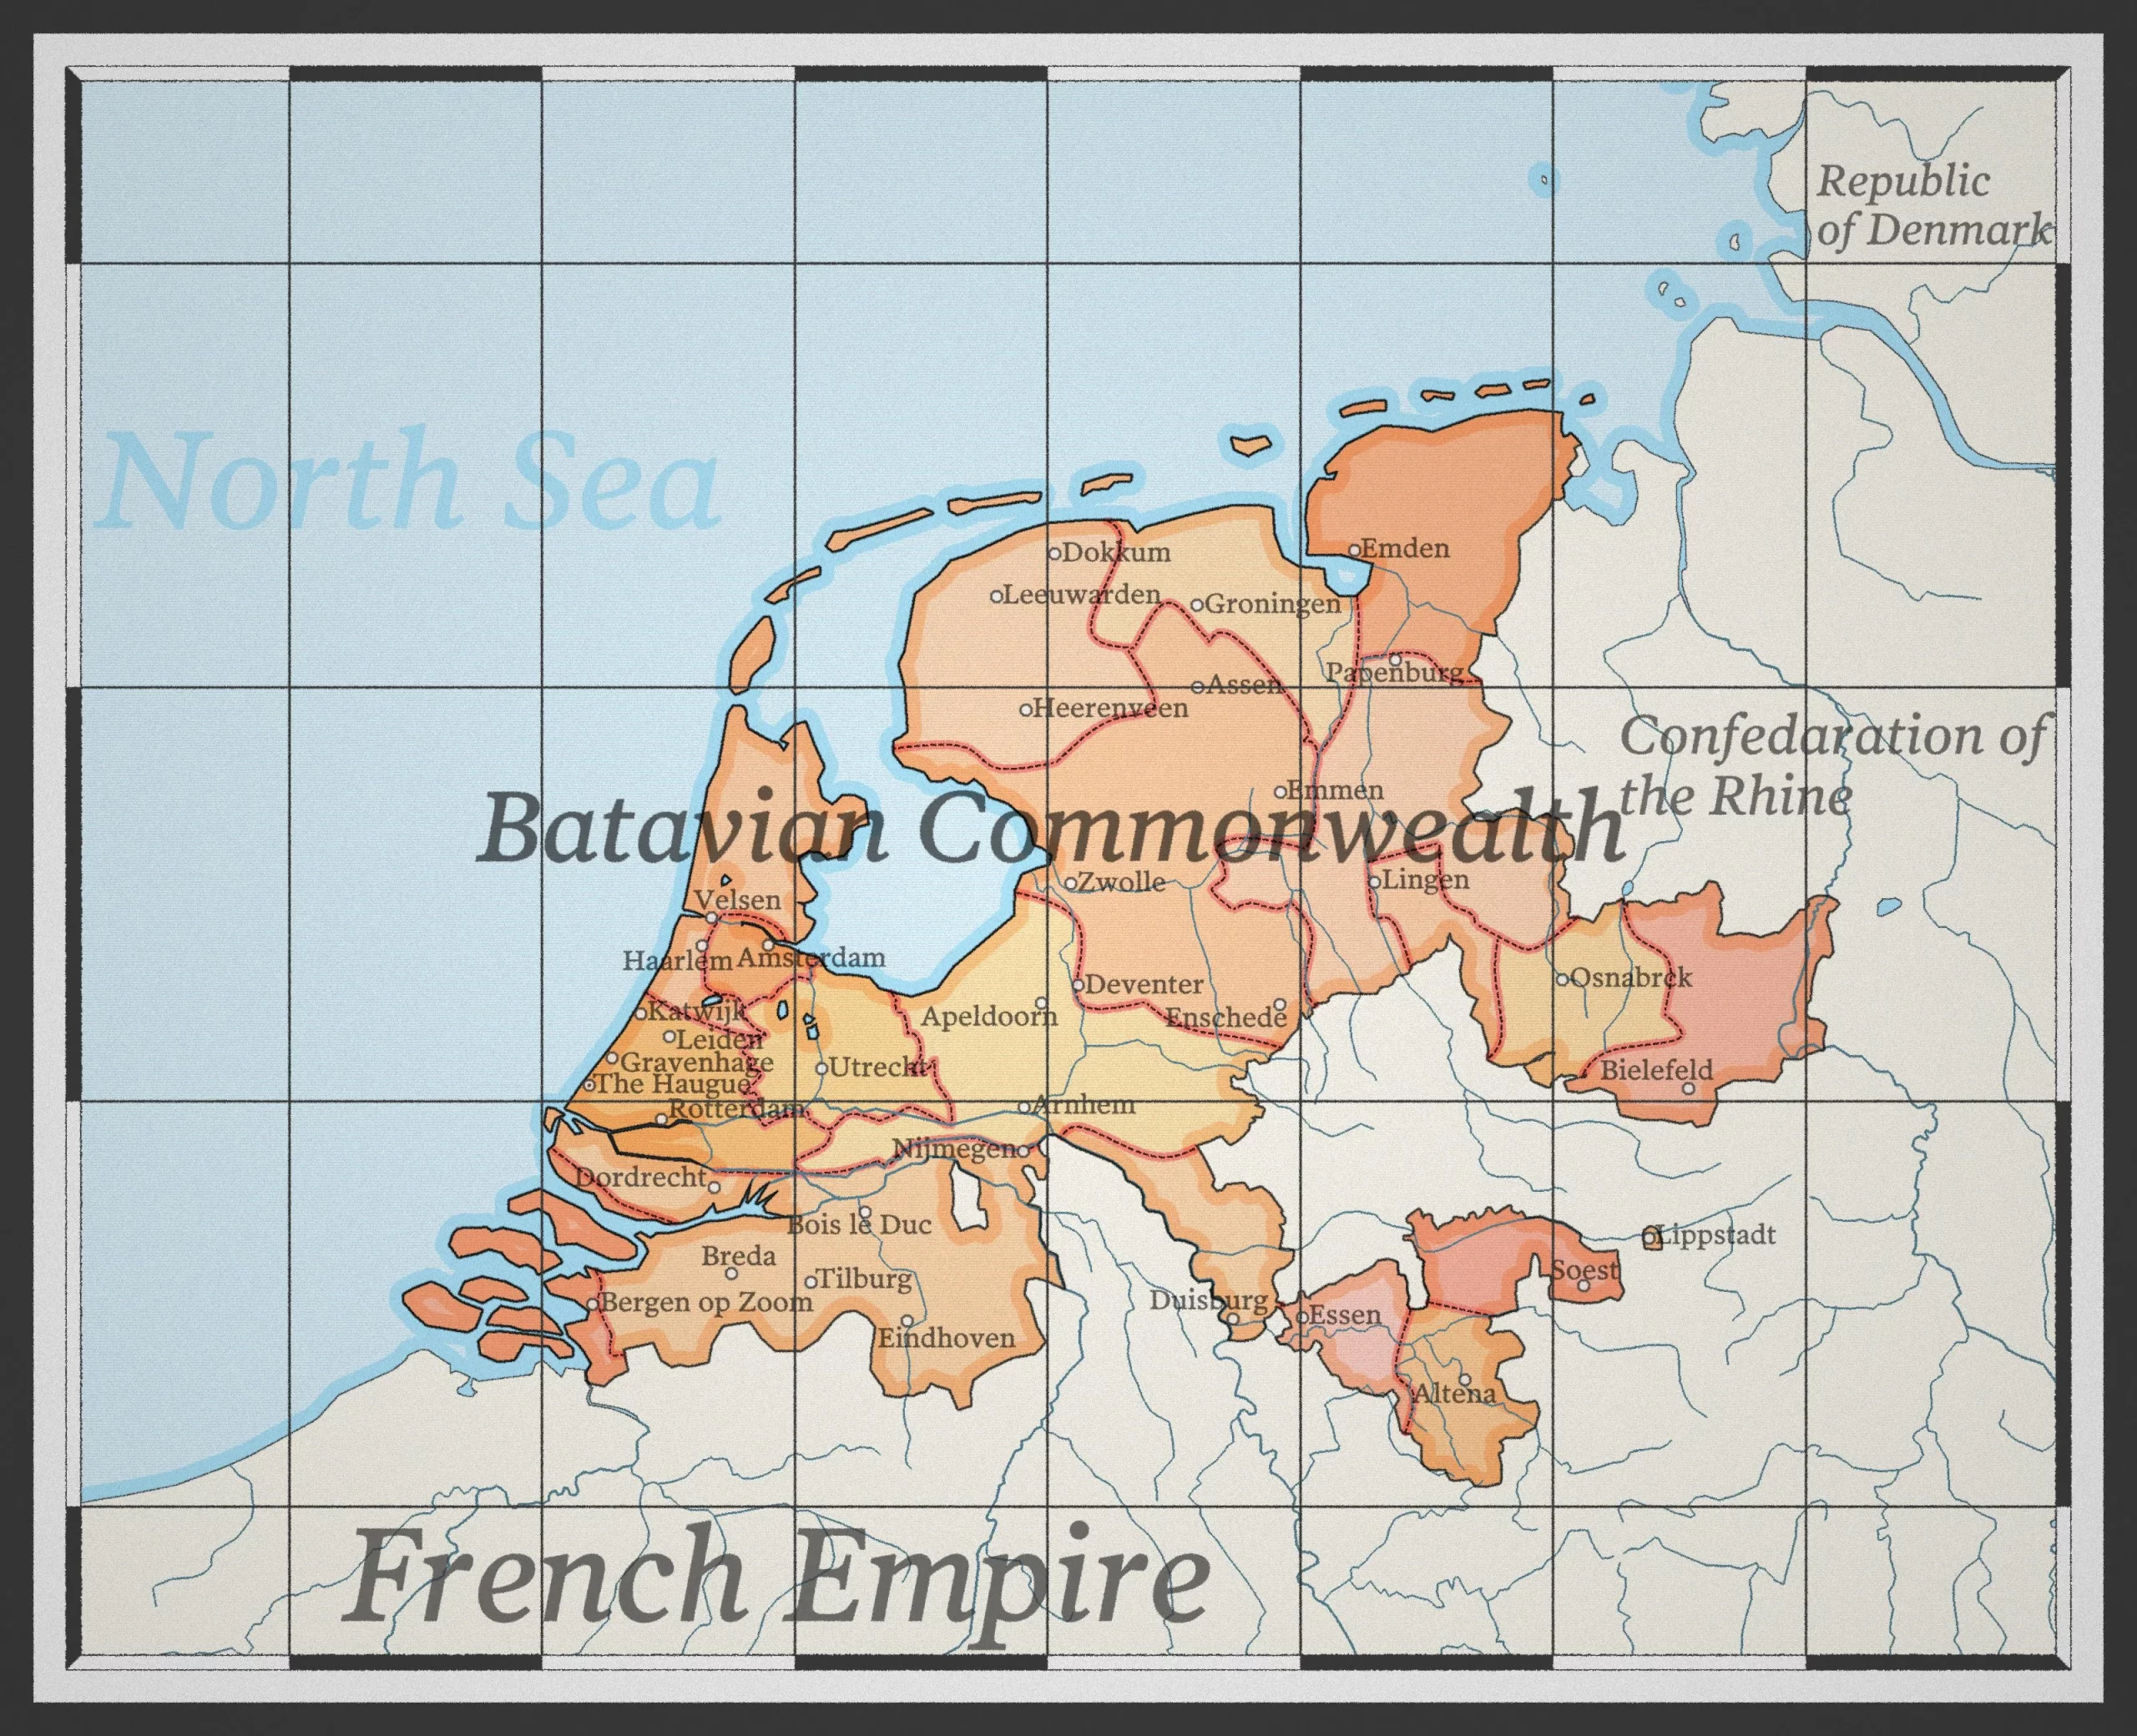 The Batavian Republic